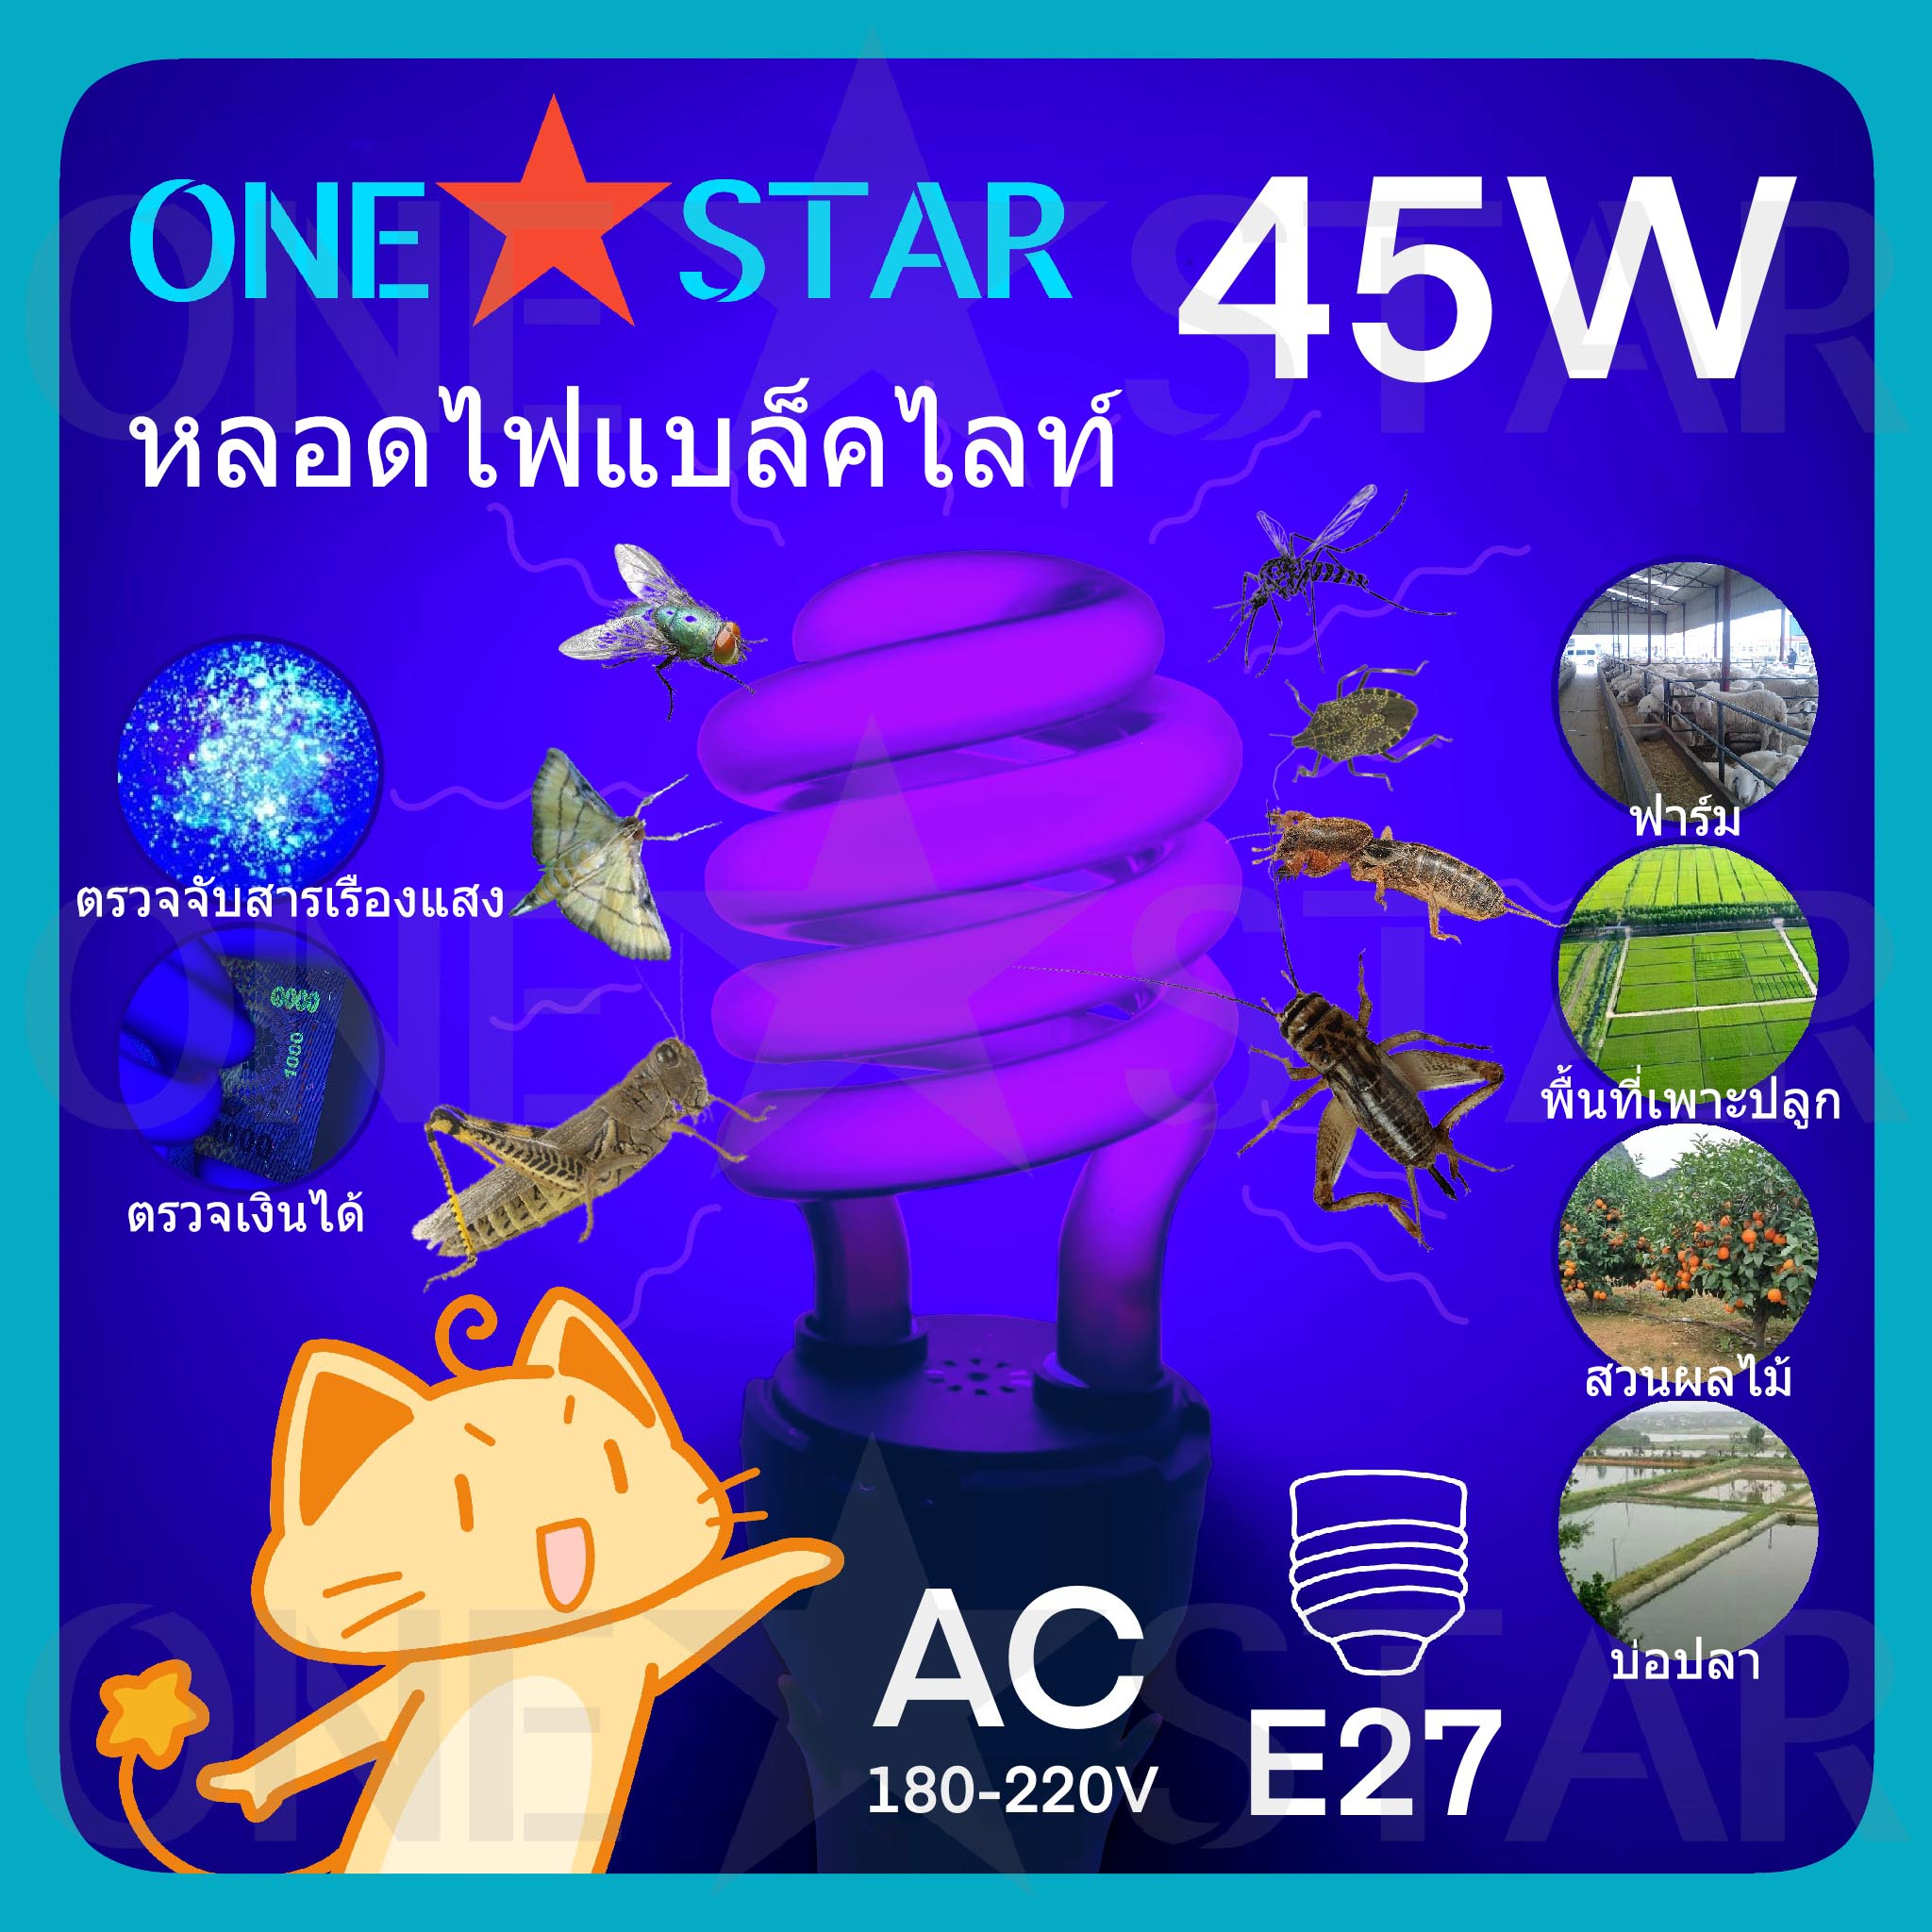 ONE STAR หลอดไฟแบล็คไลท์ Back light 45W หลอดไฟ UV ขั้วE27 ใช้ล่อแมลง ตรวจลายนิ้วมือ  ประหยัดพลังงาน พร้อมส่ง